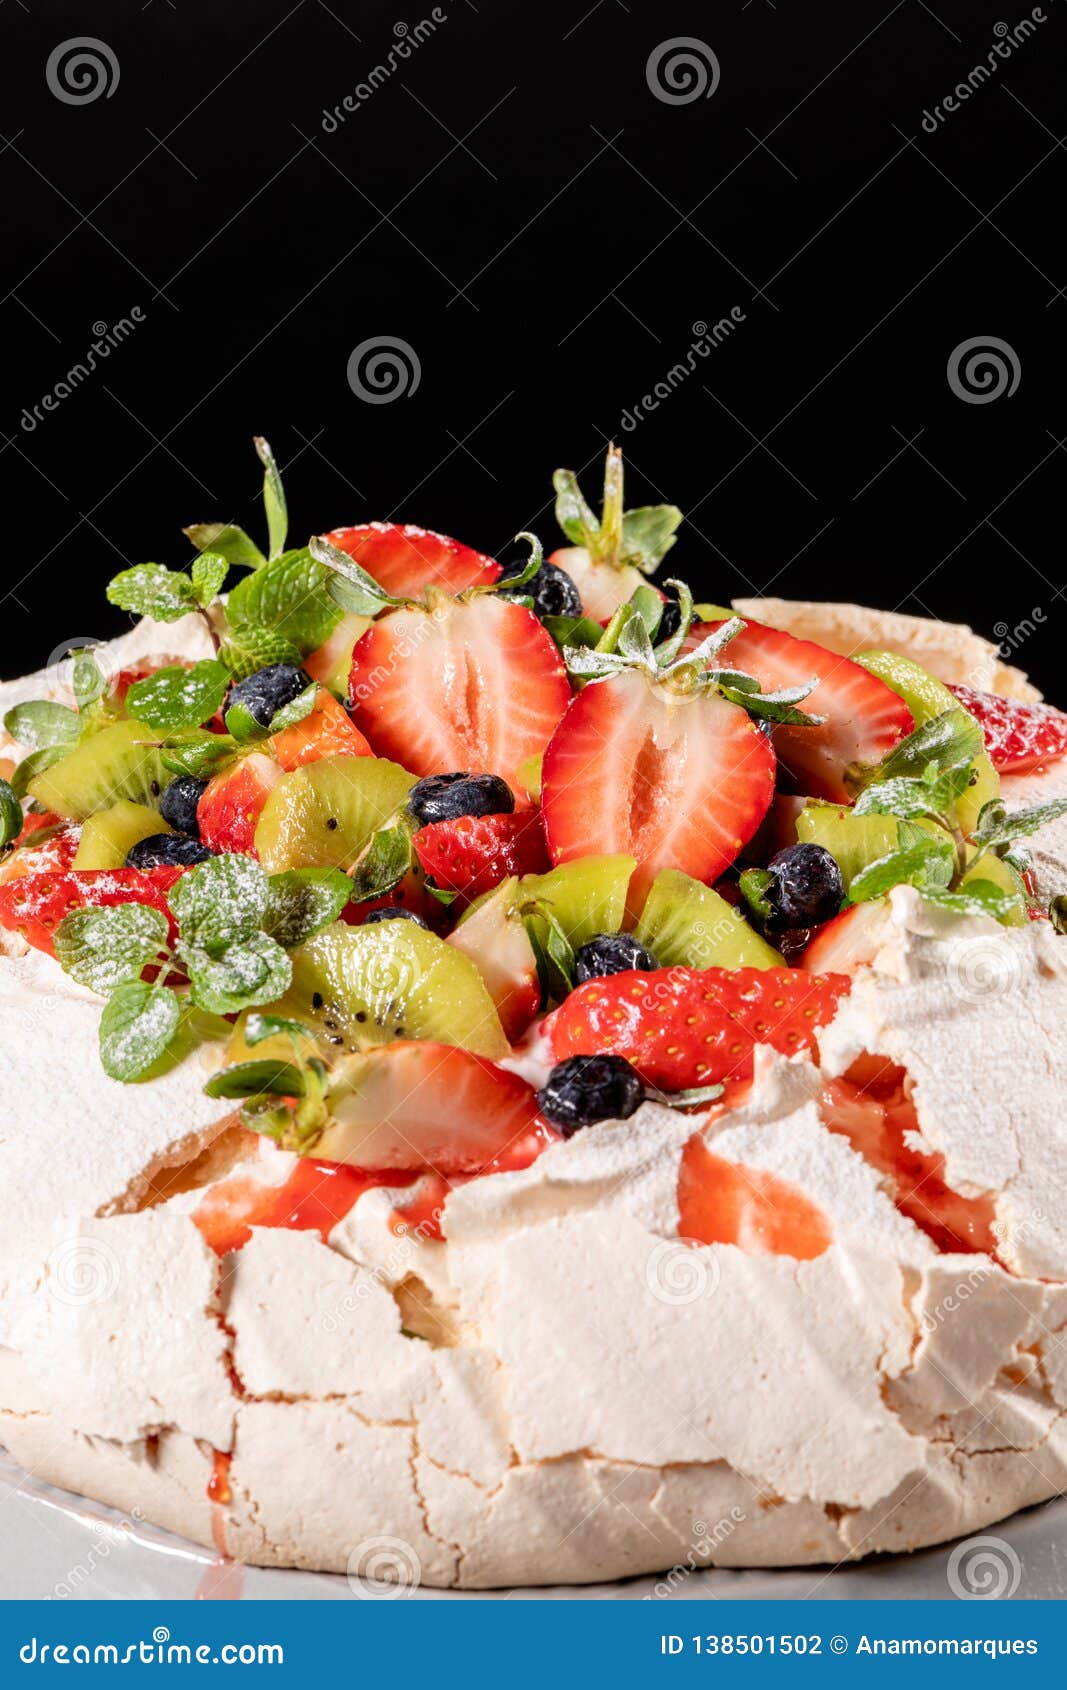 Pavlova Meringue Cake Dessert Made With Strawberries Kiwi Blueberries And Mint Stock Photo Image Of Ornate Mint 138501502